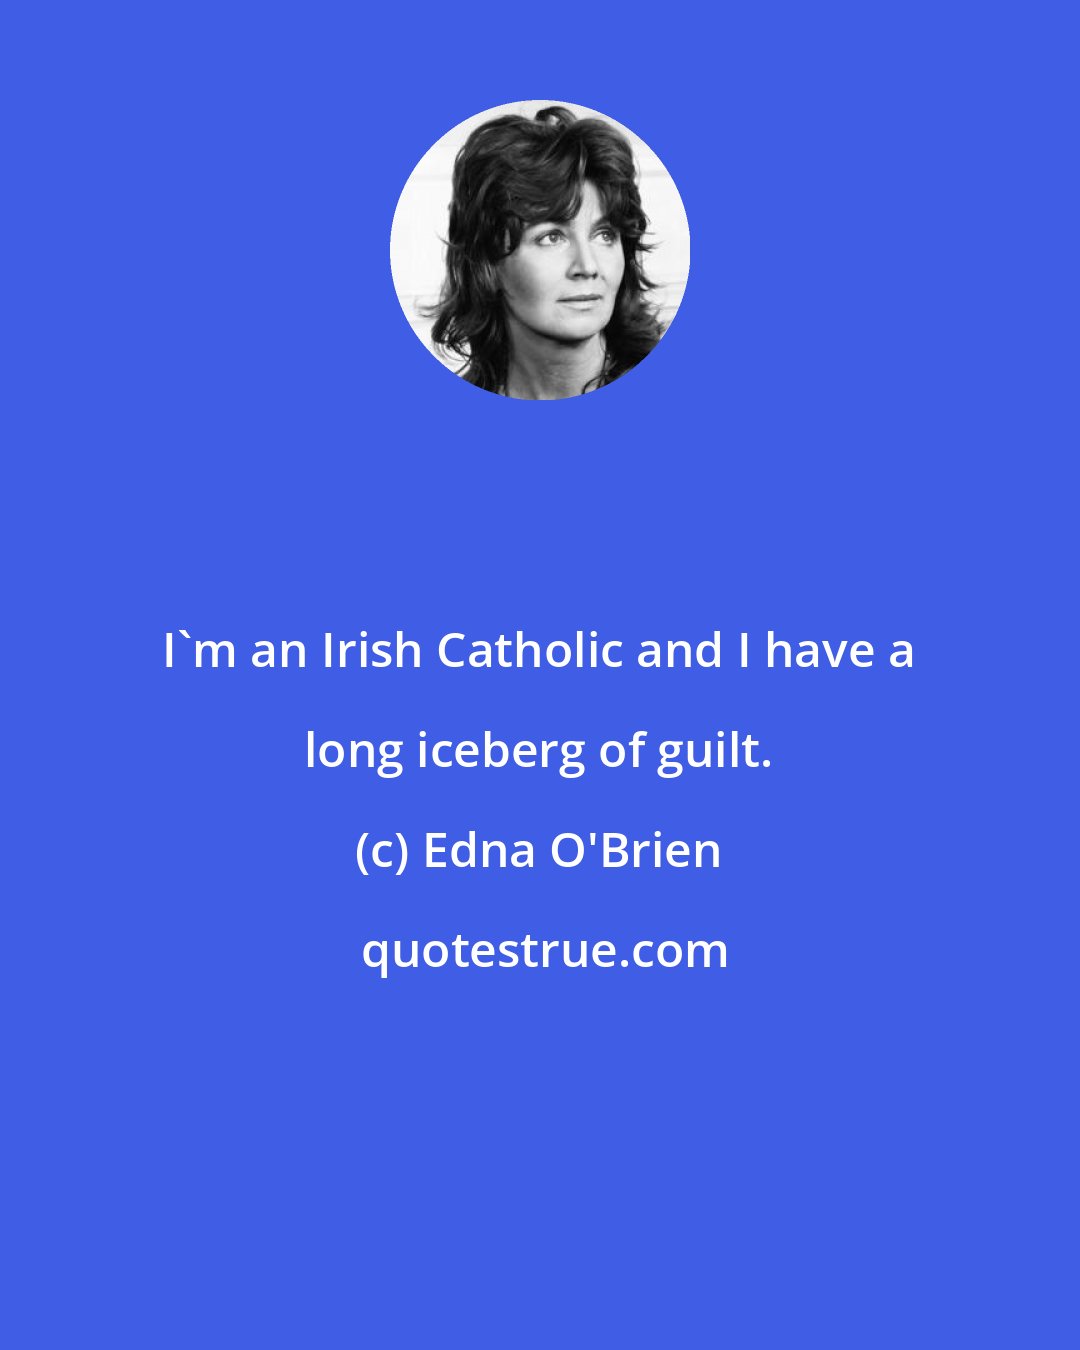 Edna O'Brien: I'm an Irish Catholic and I have a long iceberg of guilt.